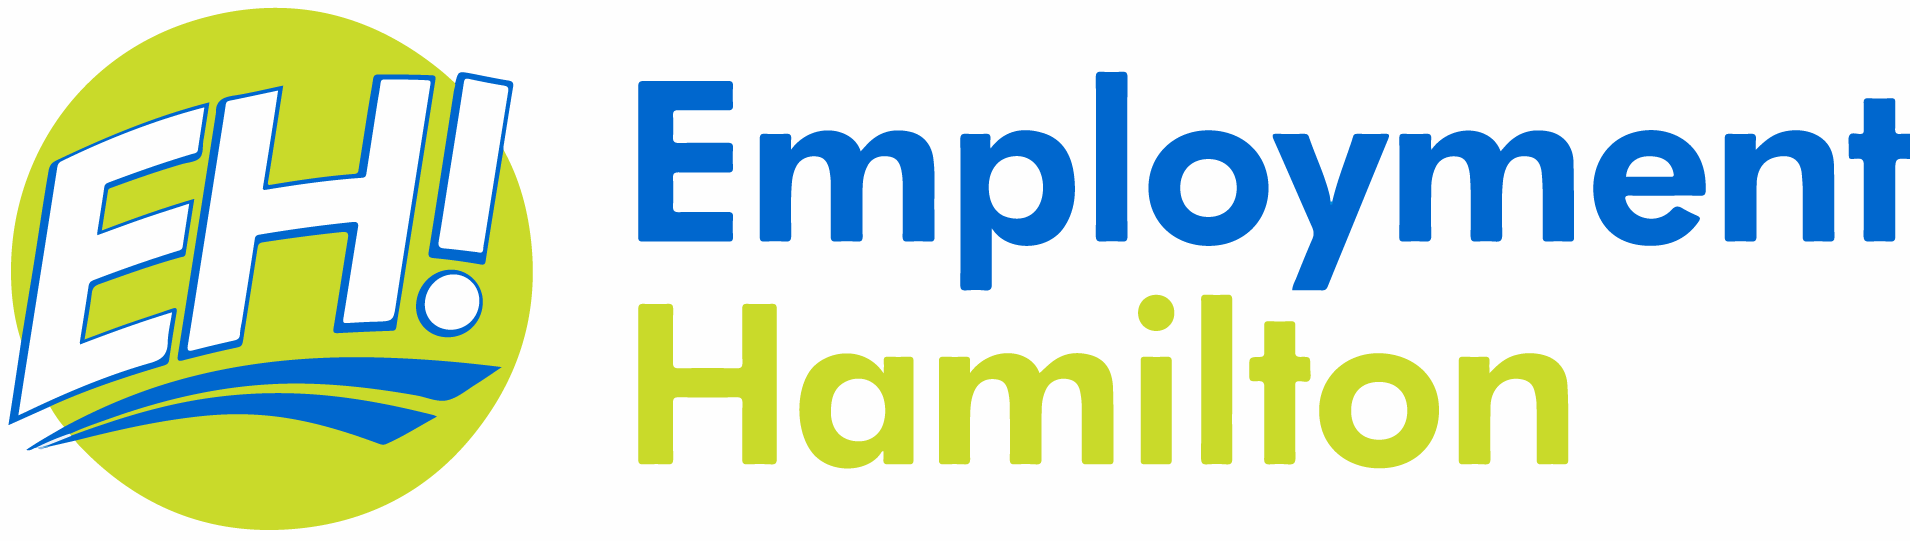 Job Board for Hamilton and surrounding areas